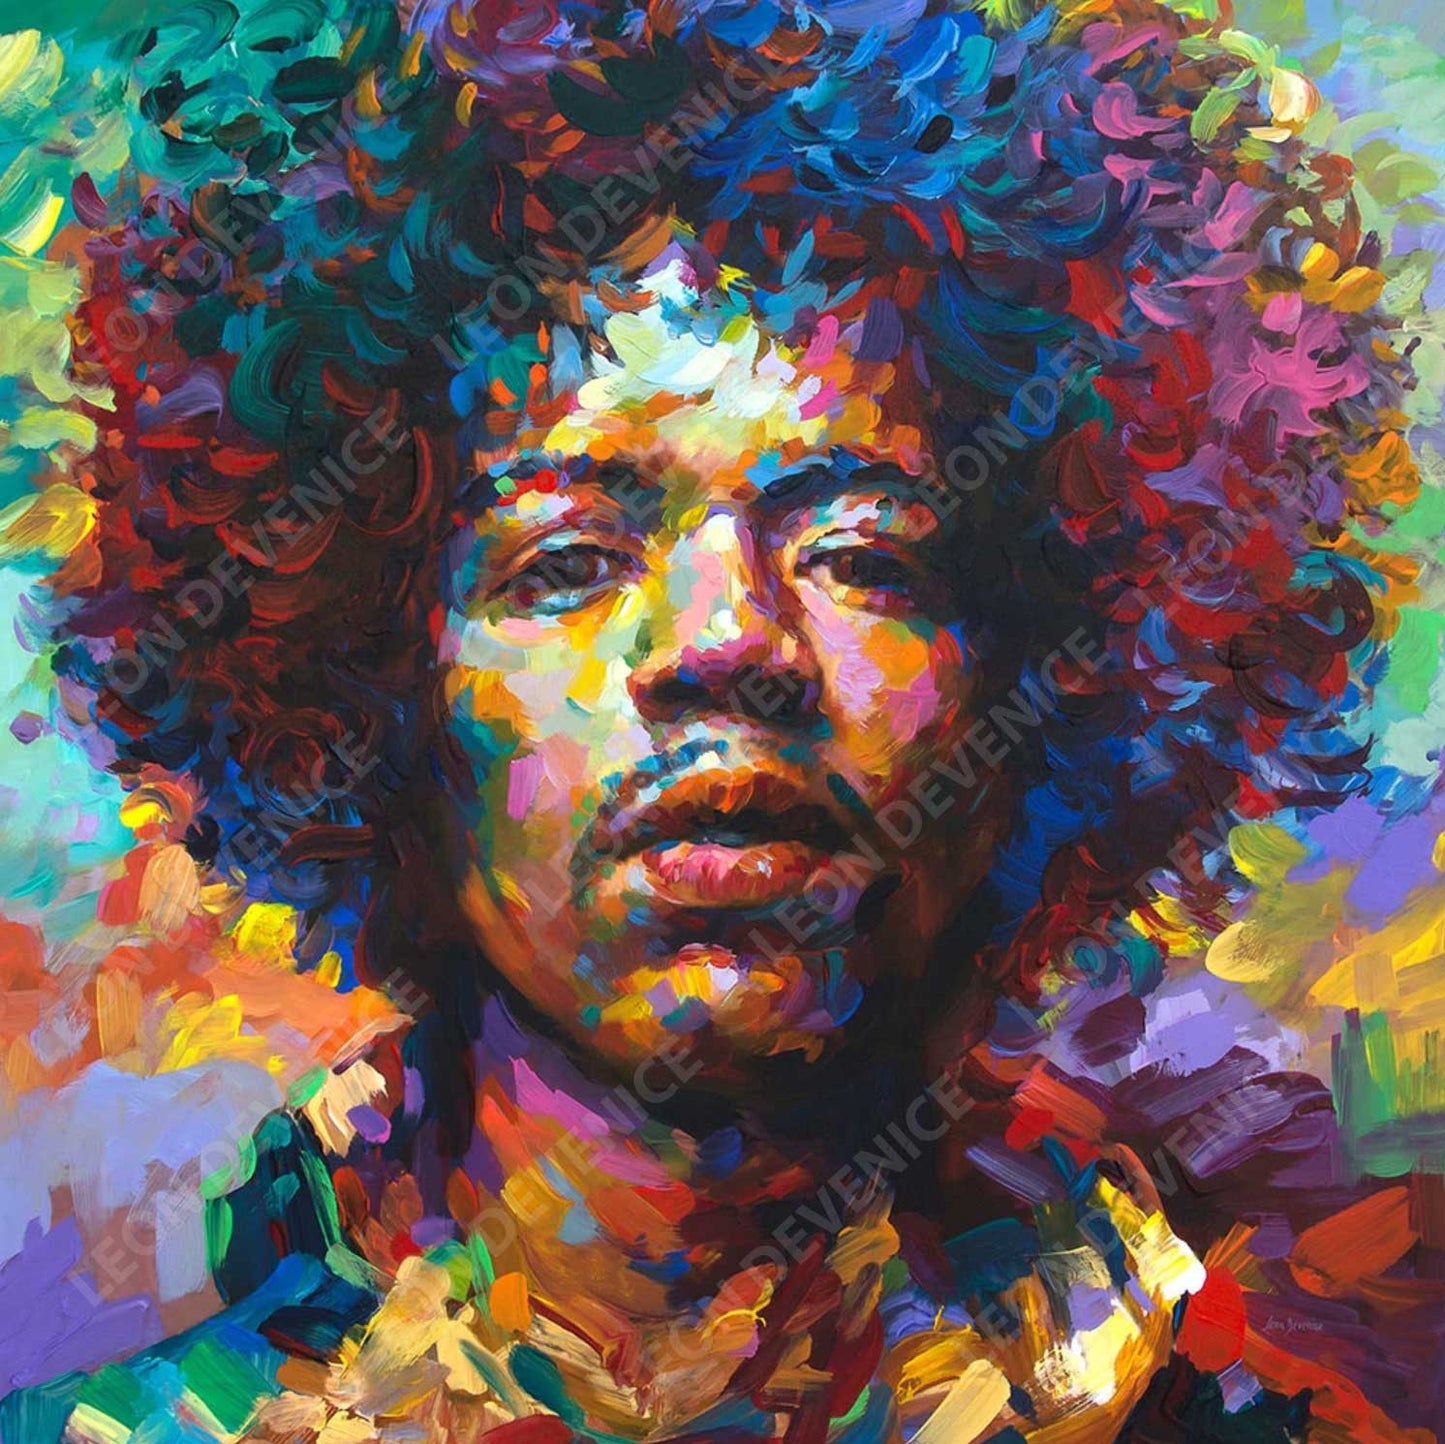 Jimi Hendrix portrait painting 